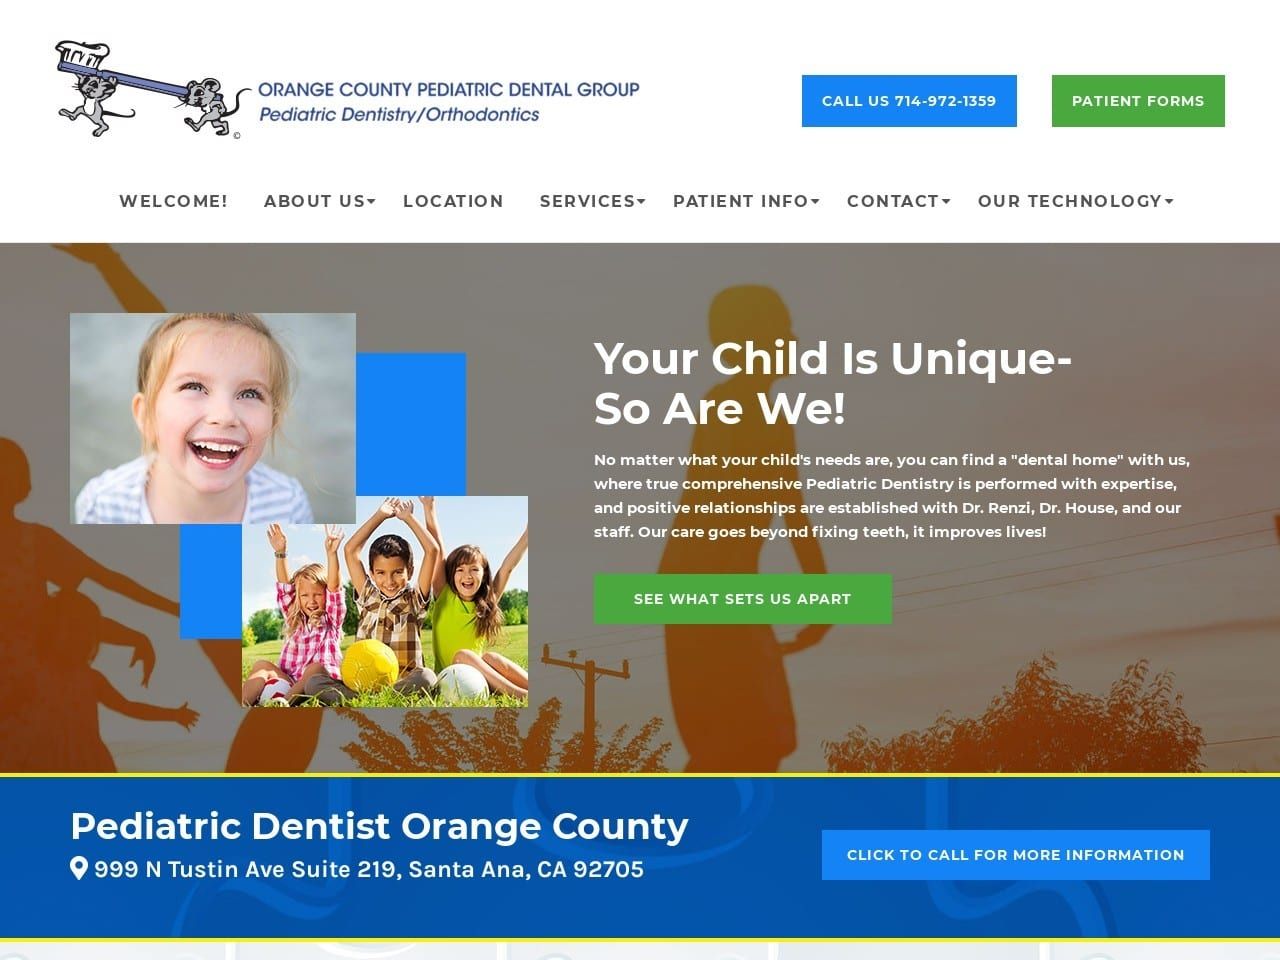 Orange County Pediatric Dental Group Website Screenshot from pedsdentistryofoc.com